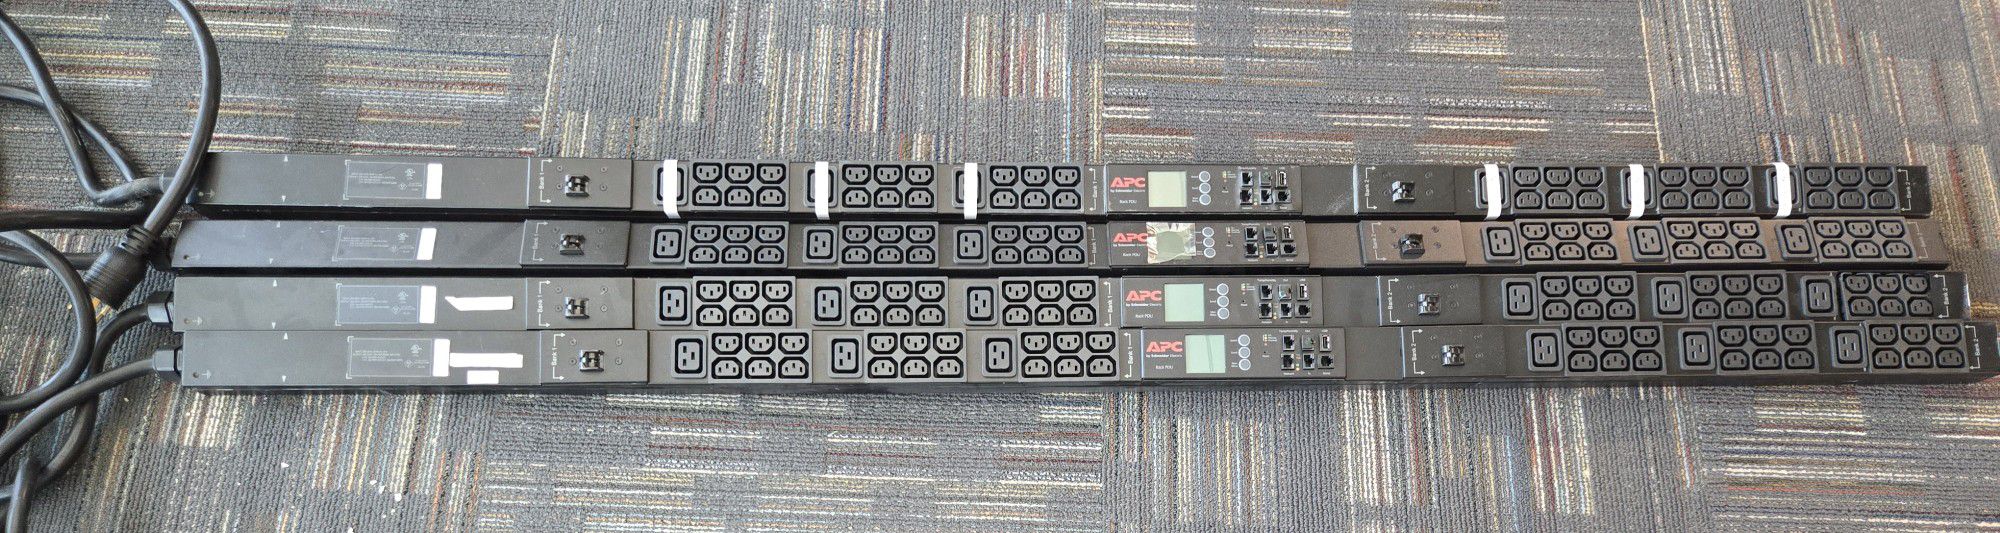 APC AP8841 200/208V 30A 300W Metered Rack PDU Lot Total of 4!